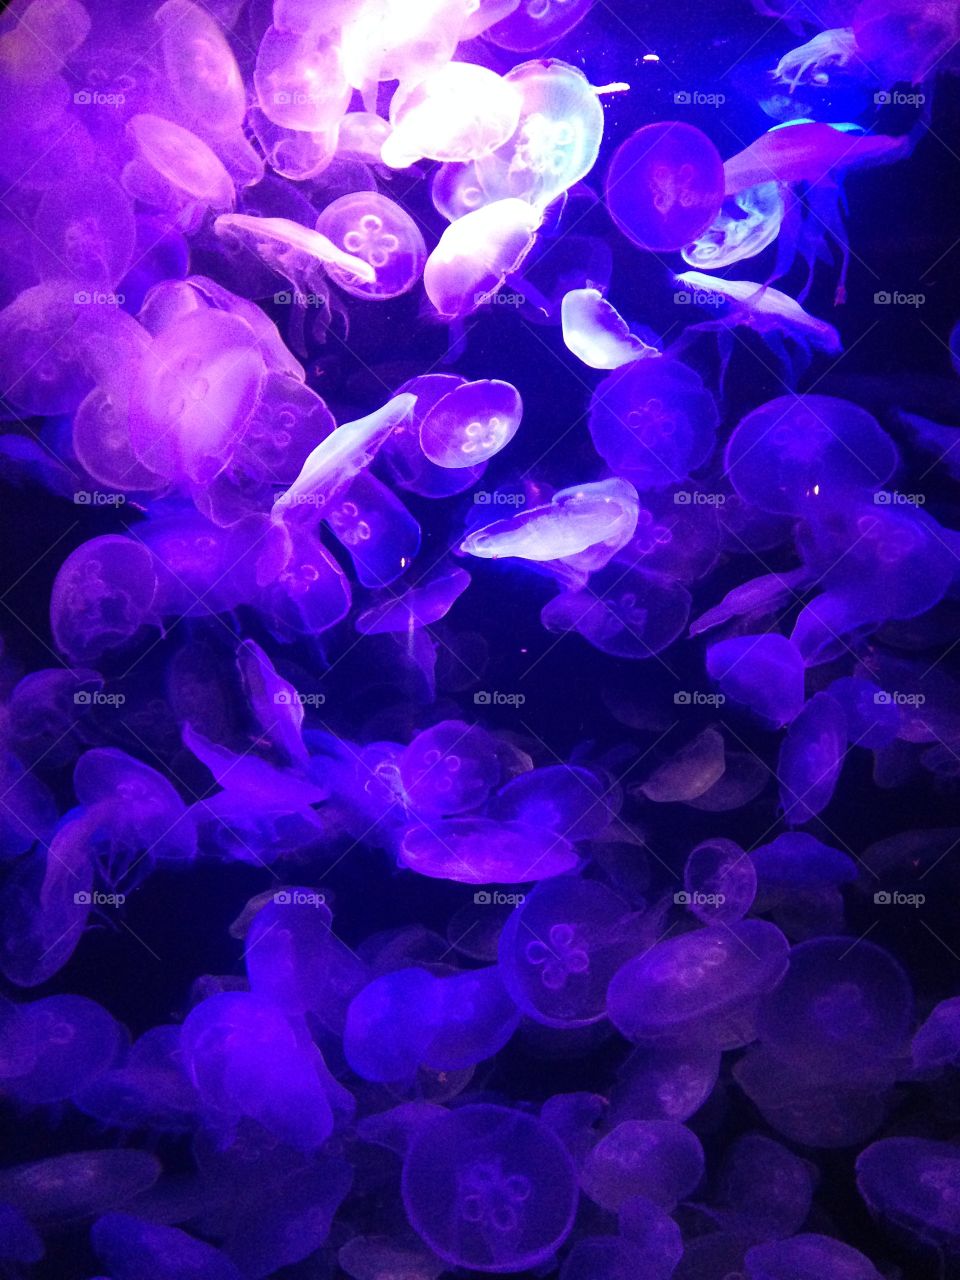 Tranquil purple jellyfish.
